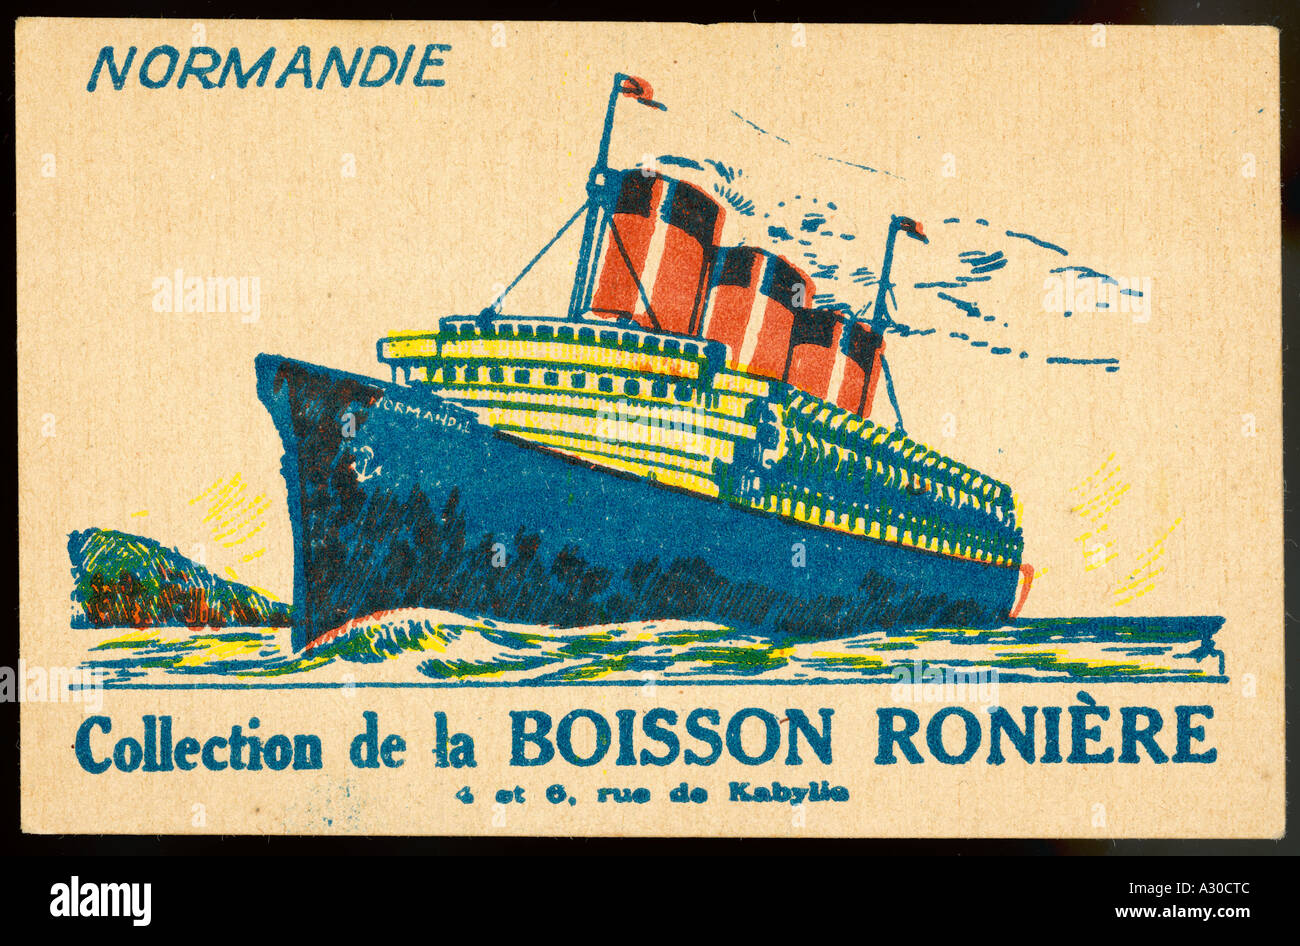 Normandie Card Stock Photo